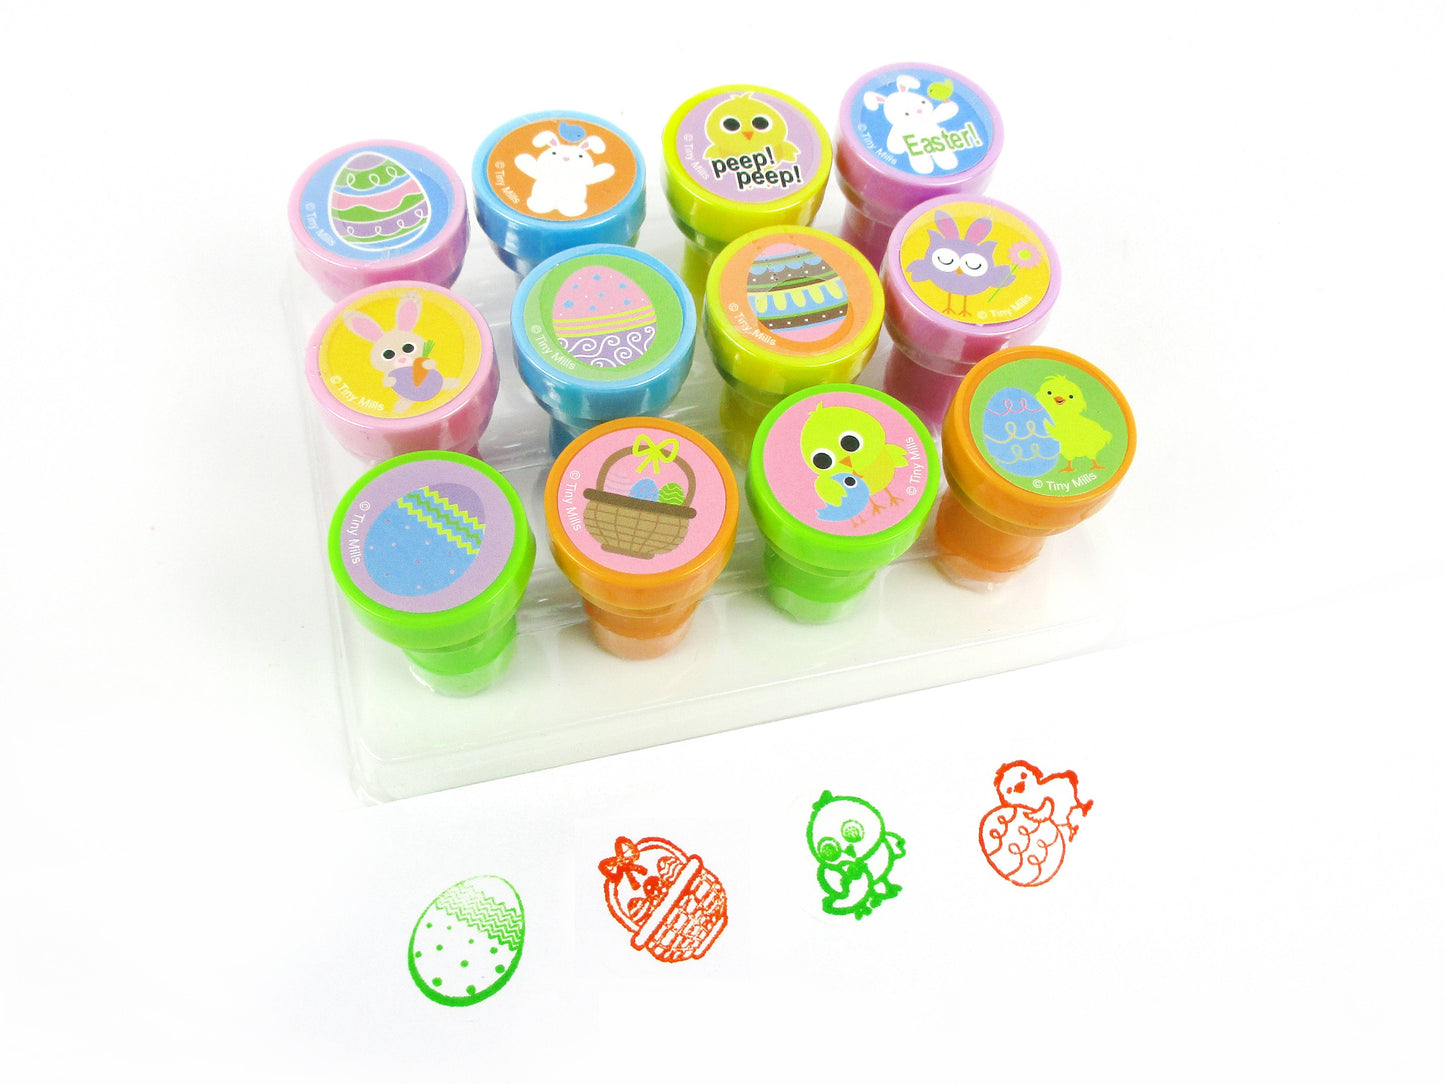 Easter Stamp Kit for Kids